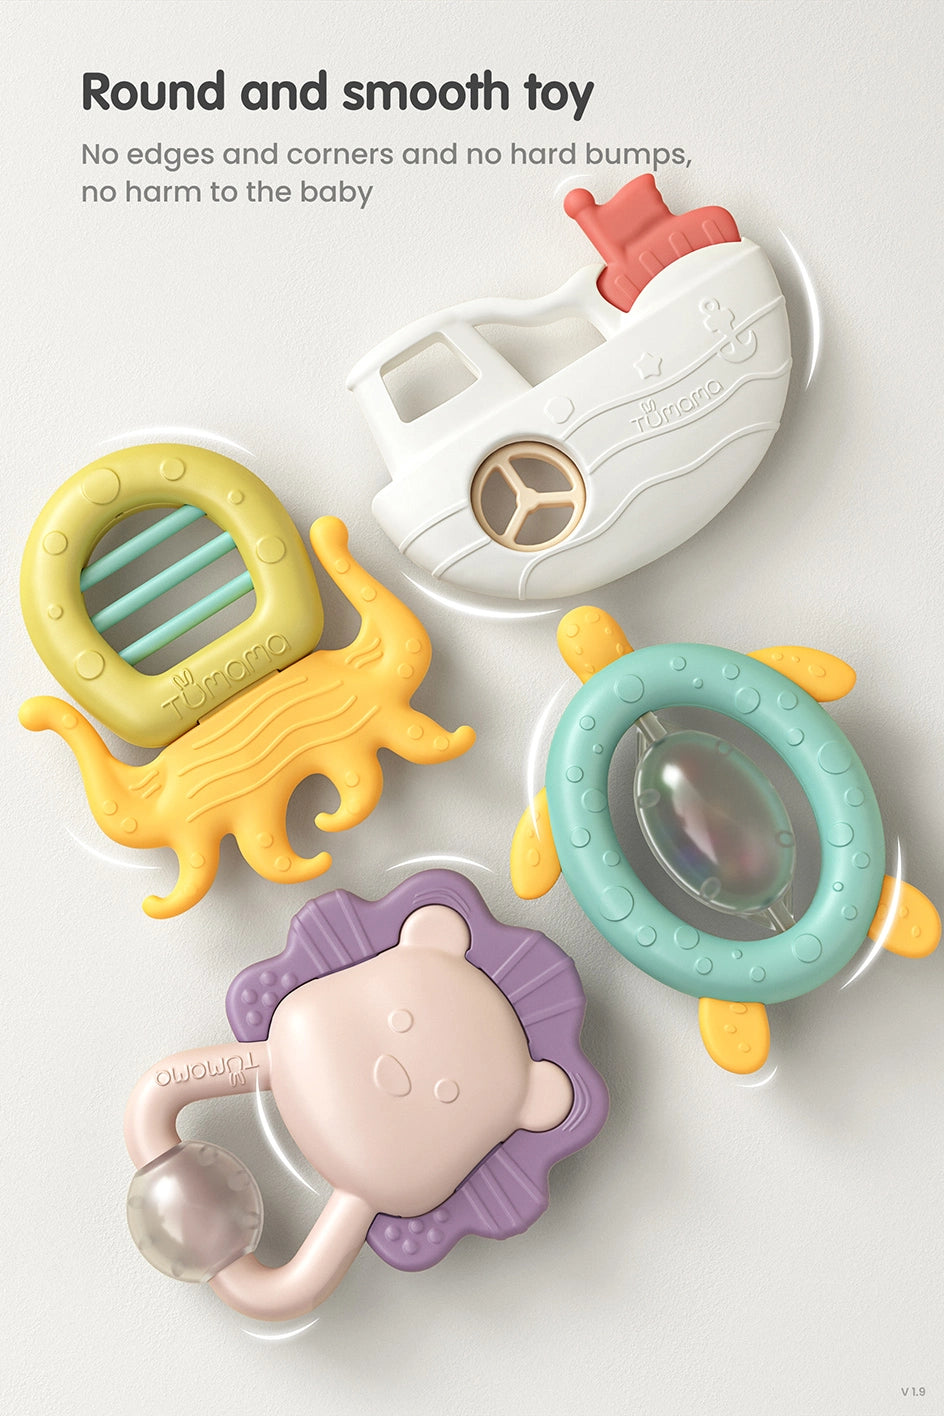 Comprehensive teething toy set for infants